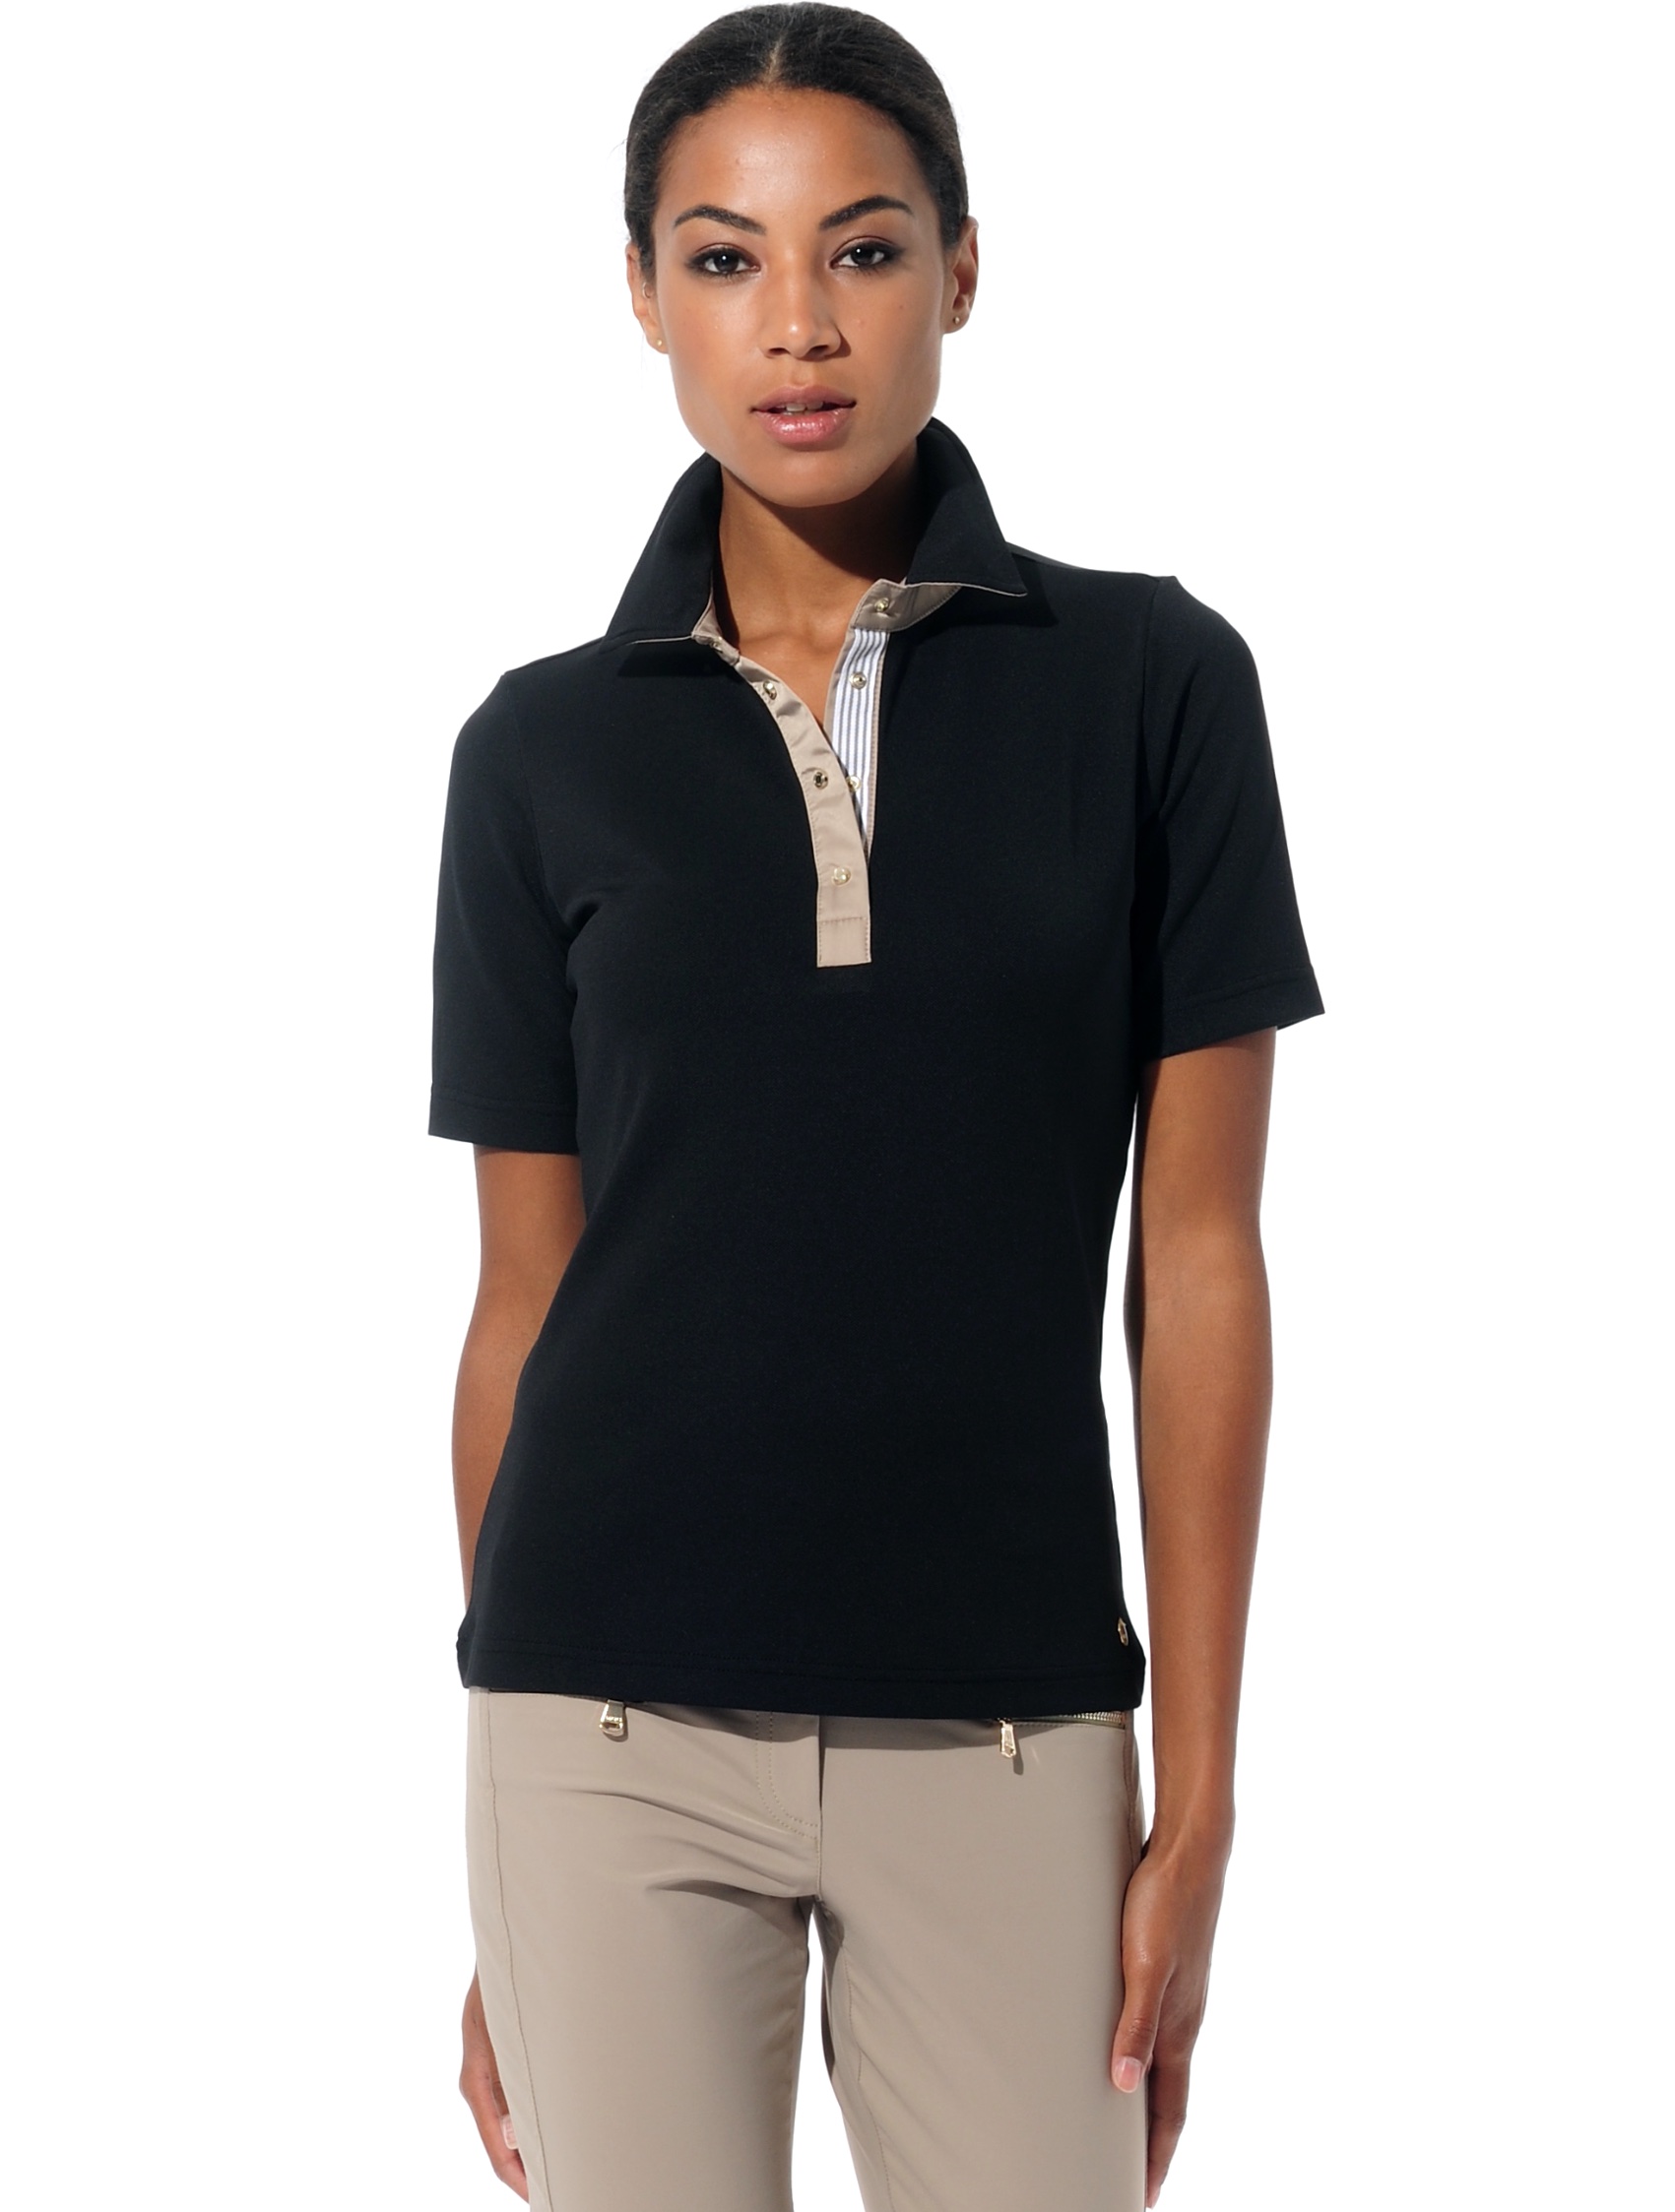 Piqué Golf Poloshirt black/taupe